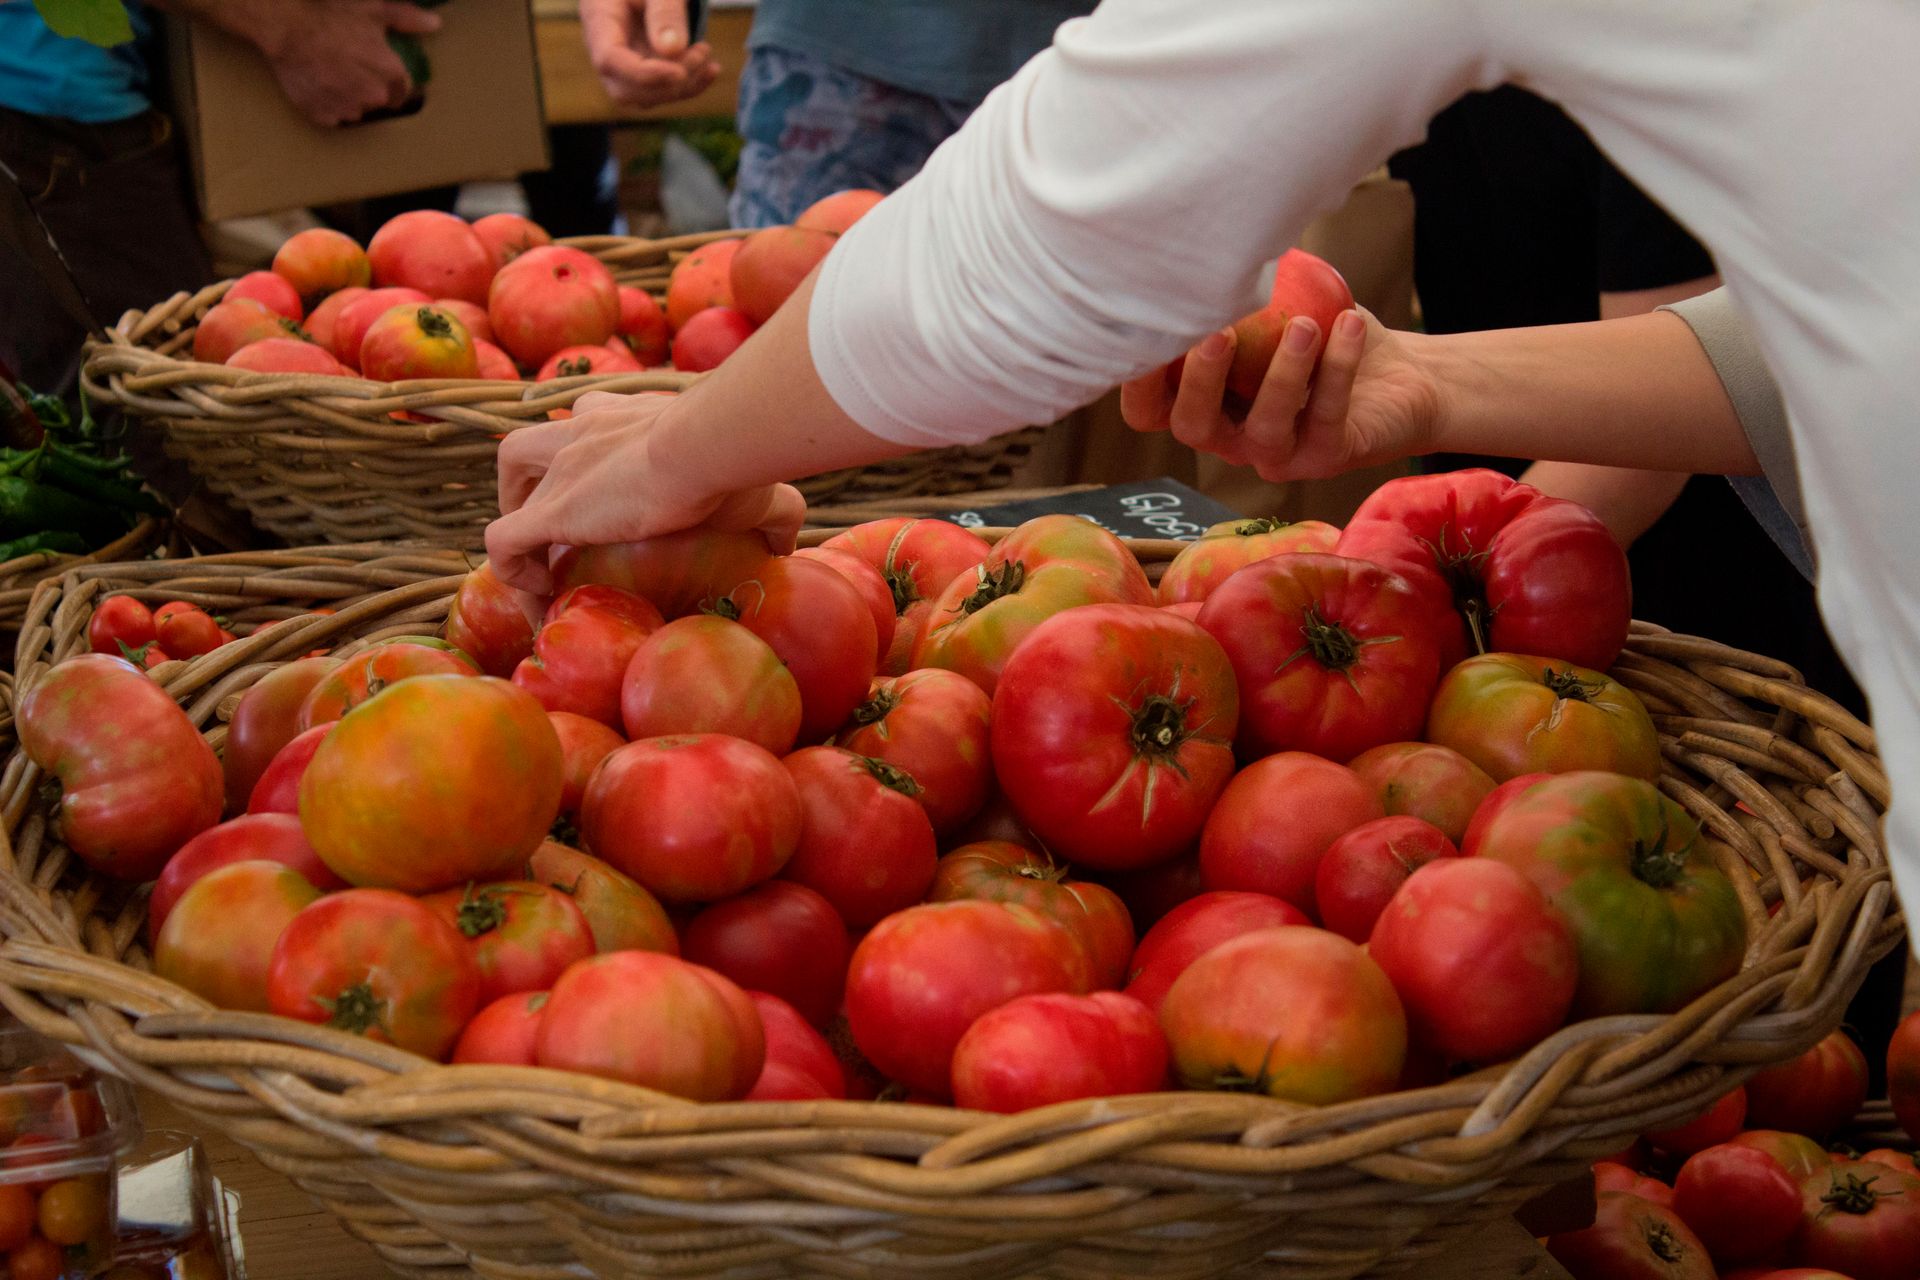 Customers selecting tomatoes at local market